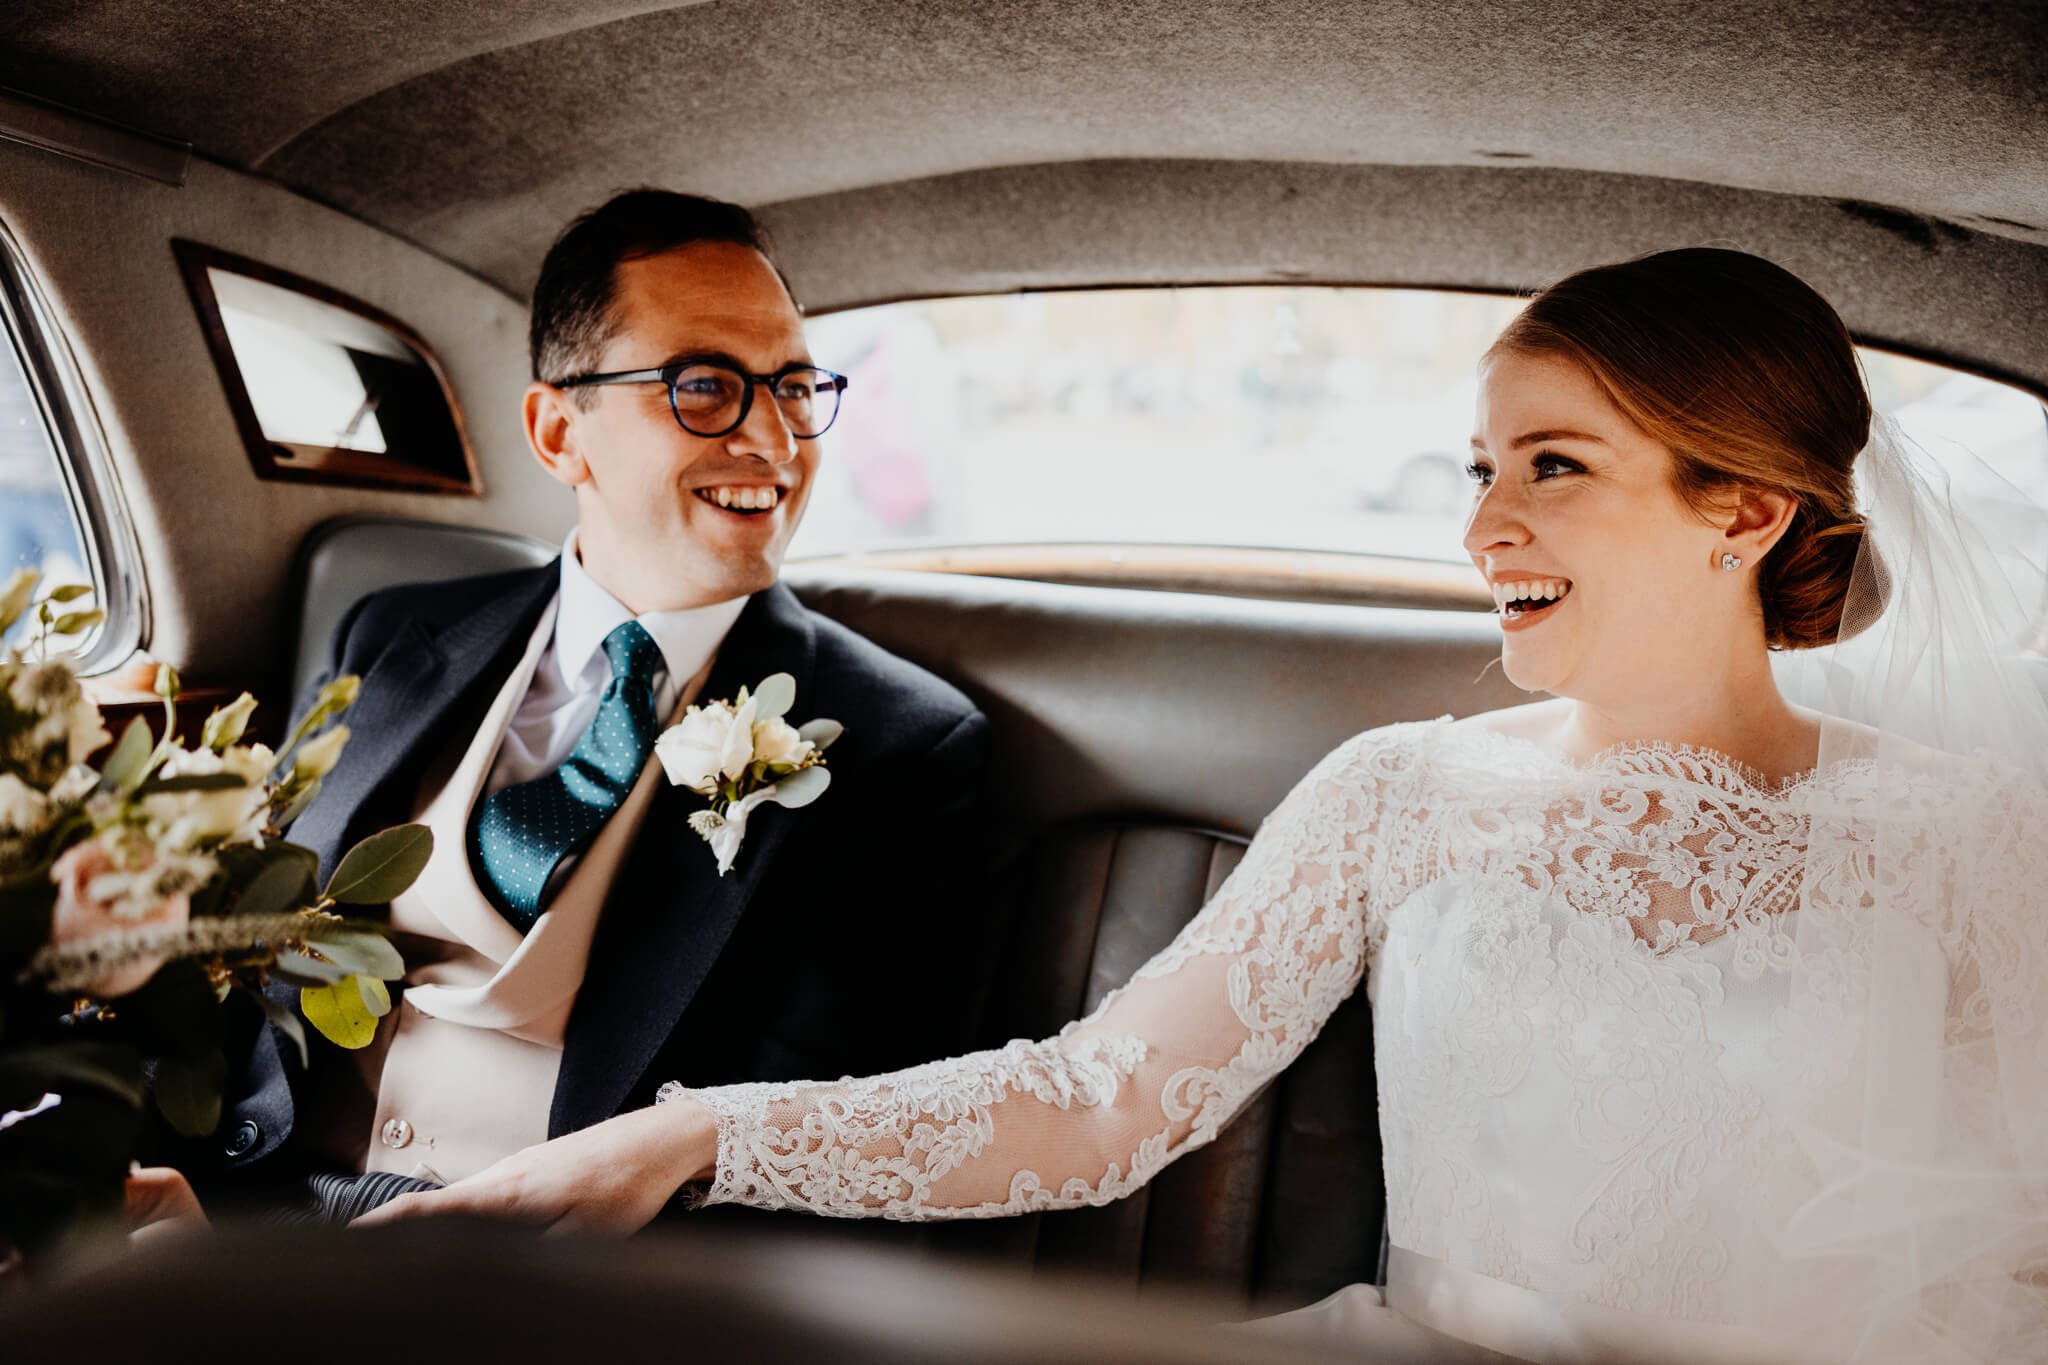 Beth-Shean-Wedding-bride-and-groom-in-car.jpg